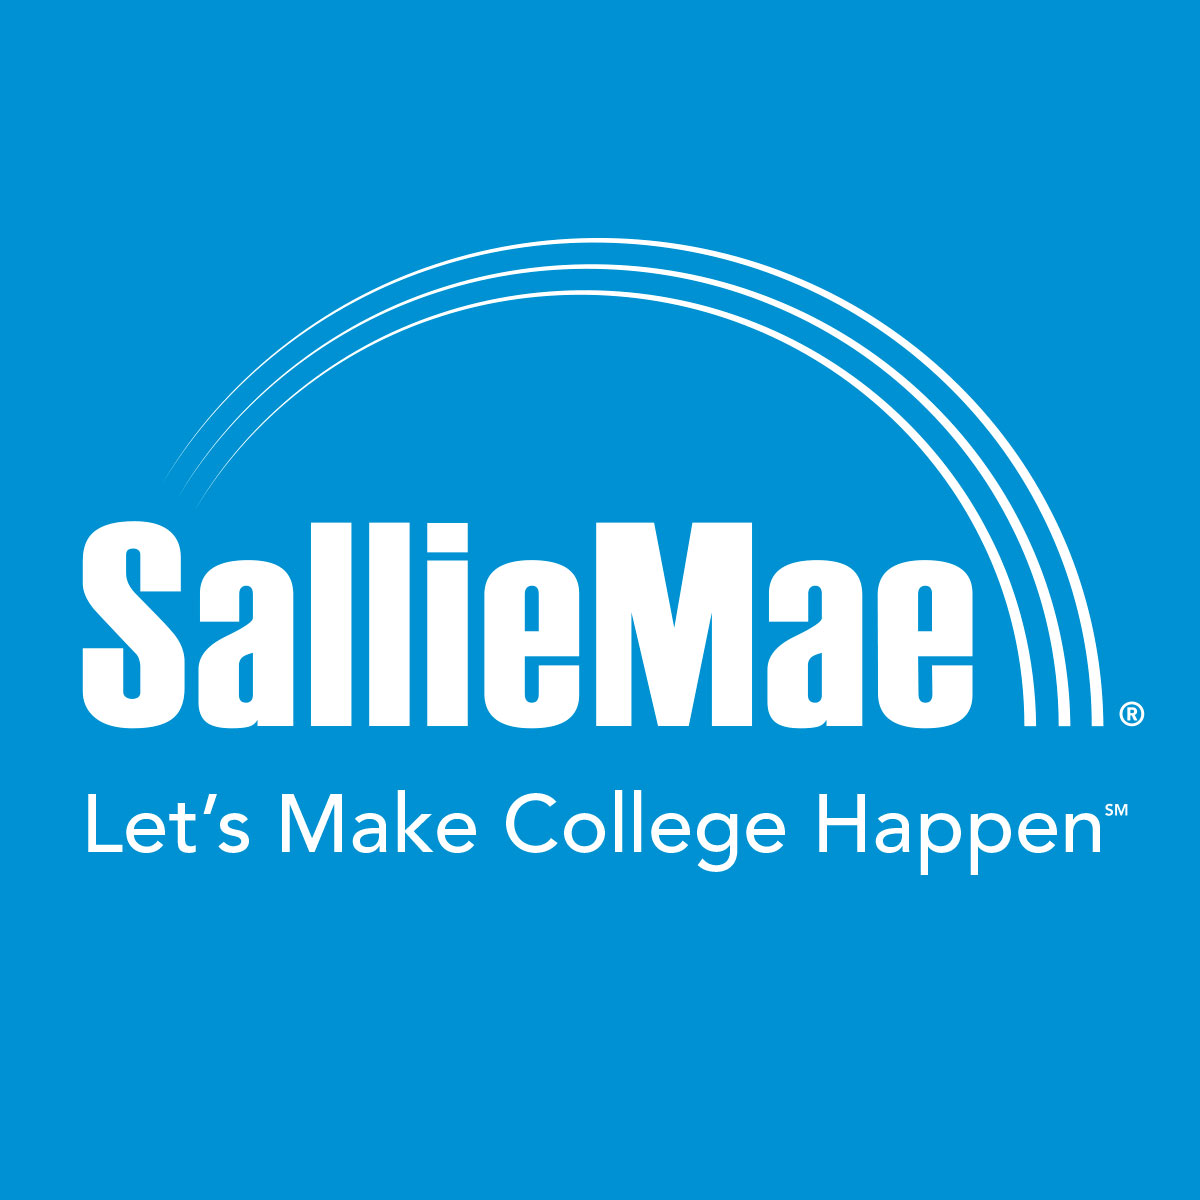 sallie mae logo